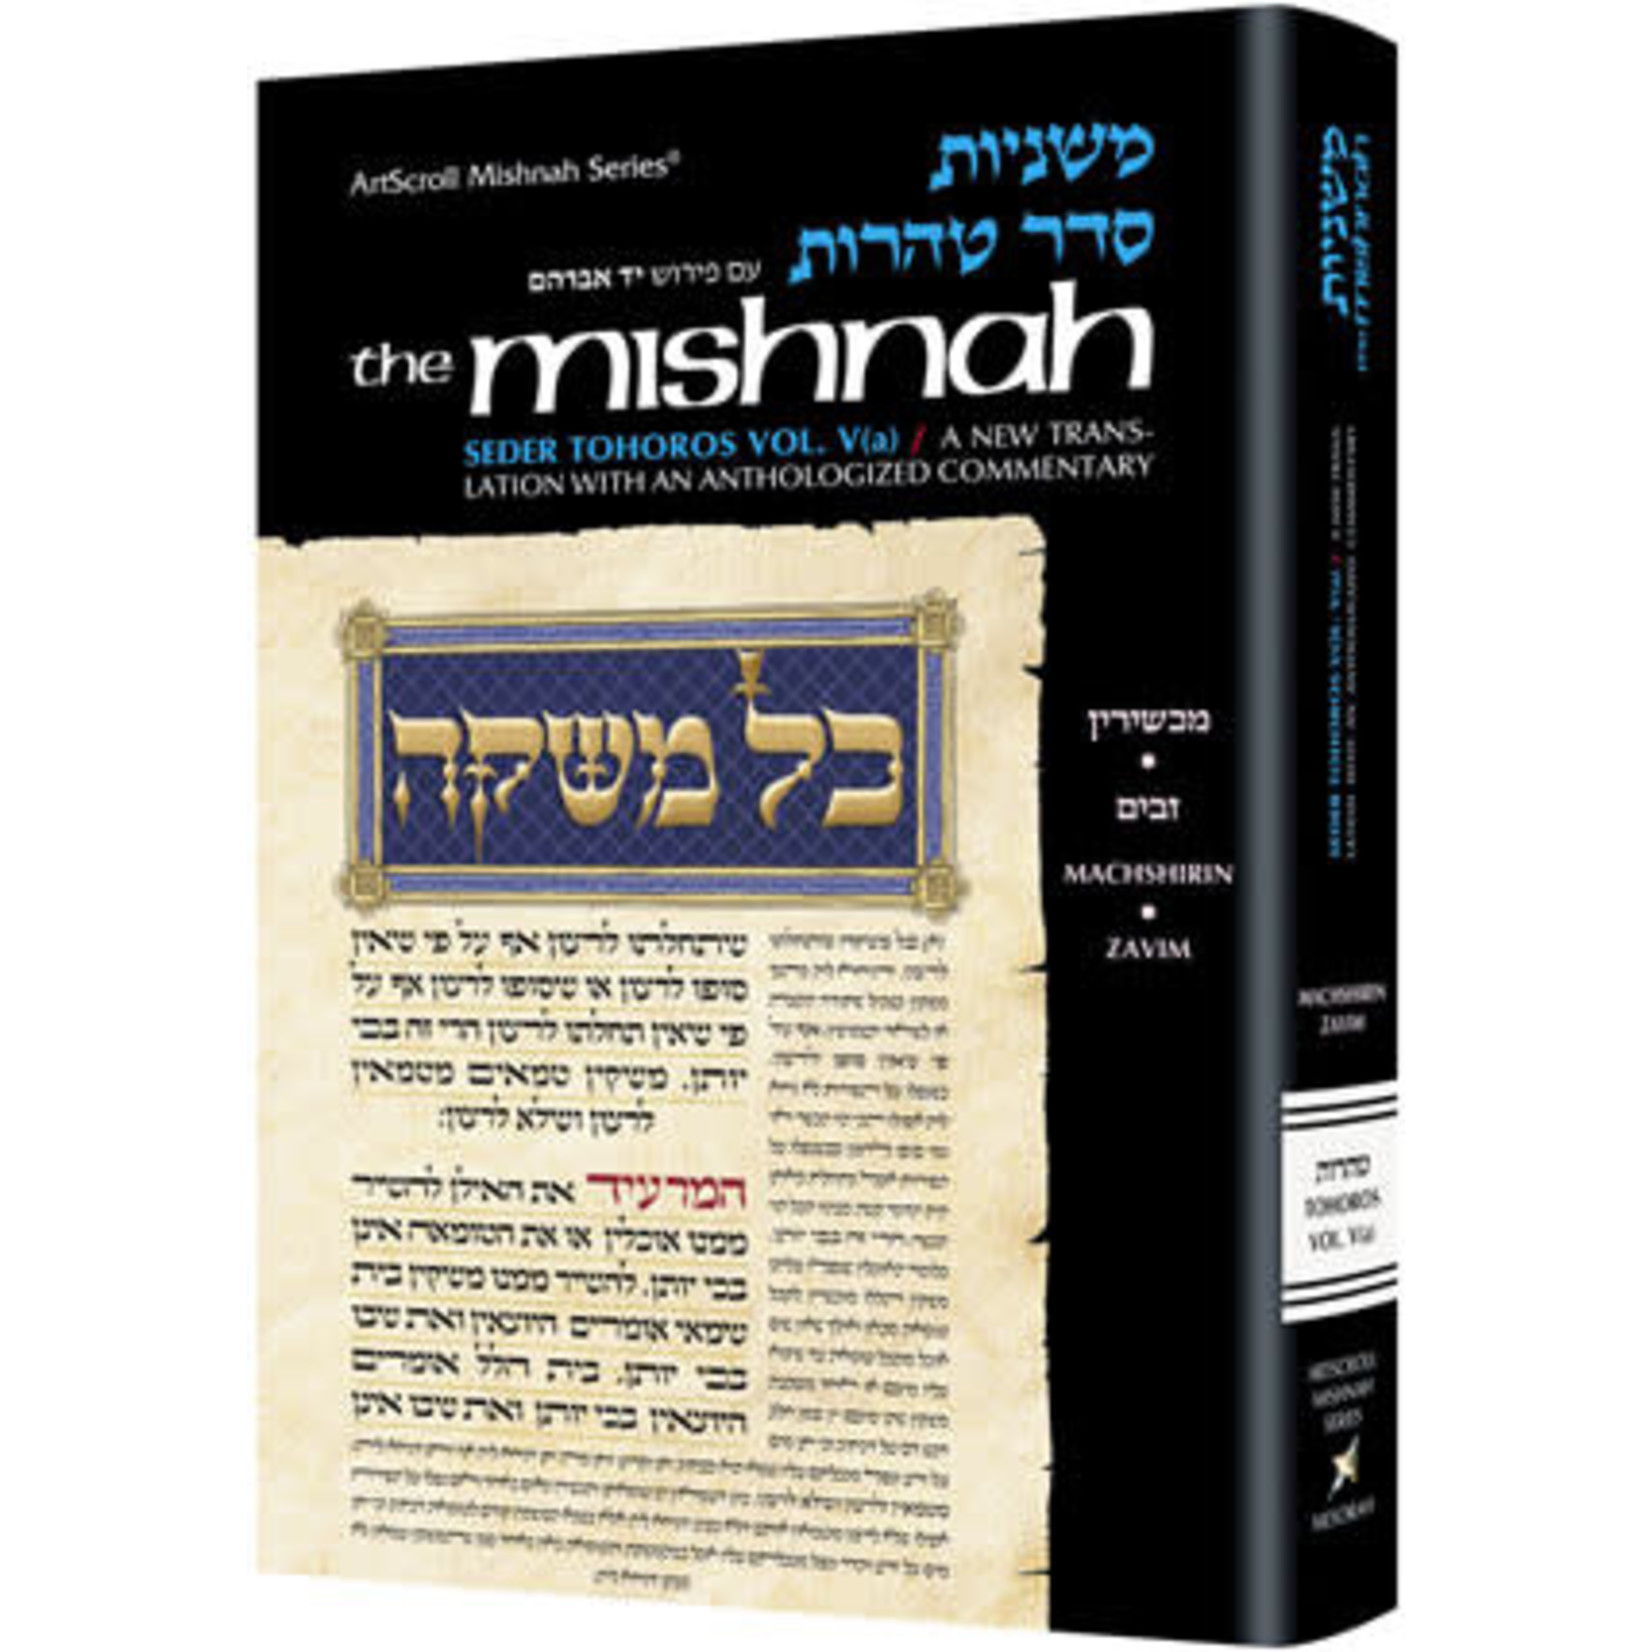 MACHSHIRIN/ZAVIM - Seder Tohoros 5(a) - ArtScroll Yad Avraham Series Hebrew/English Mishnah, Full Size